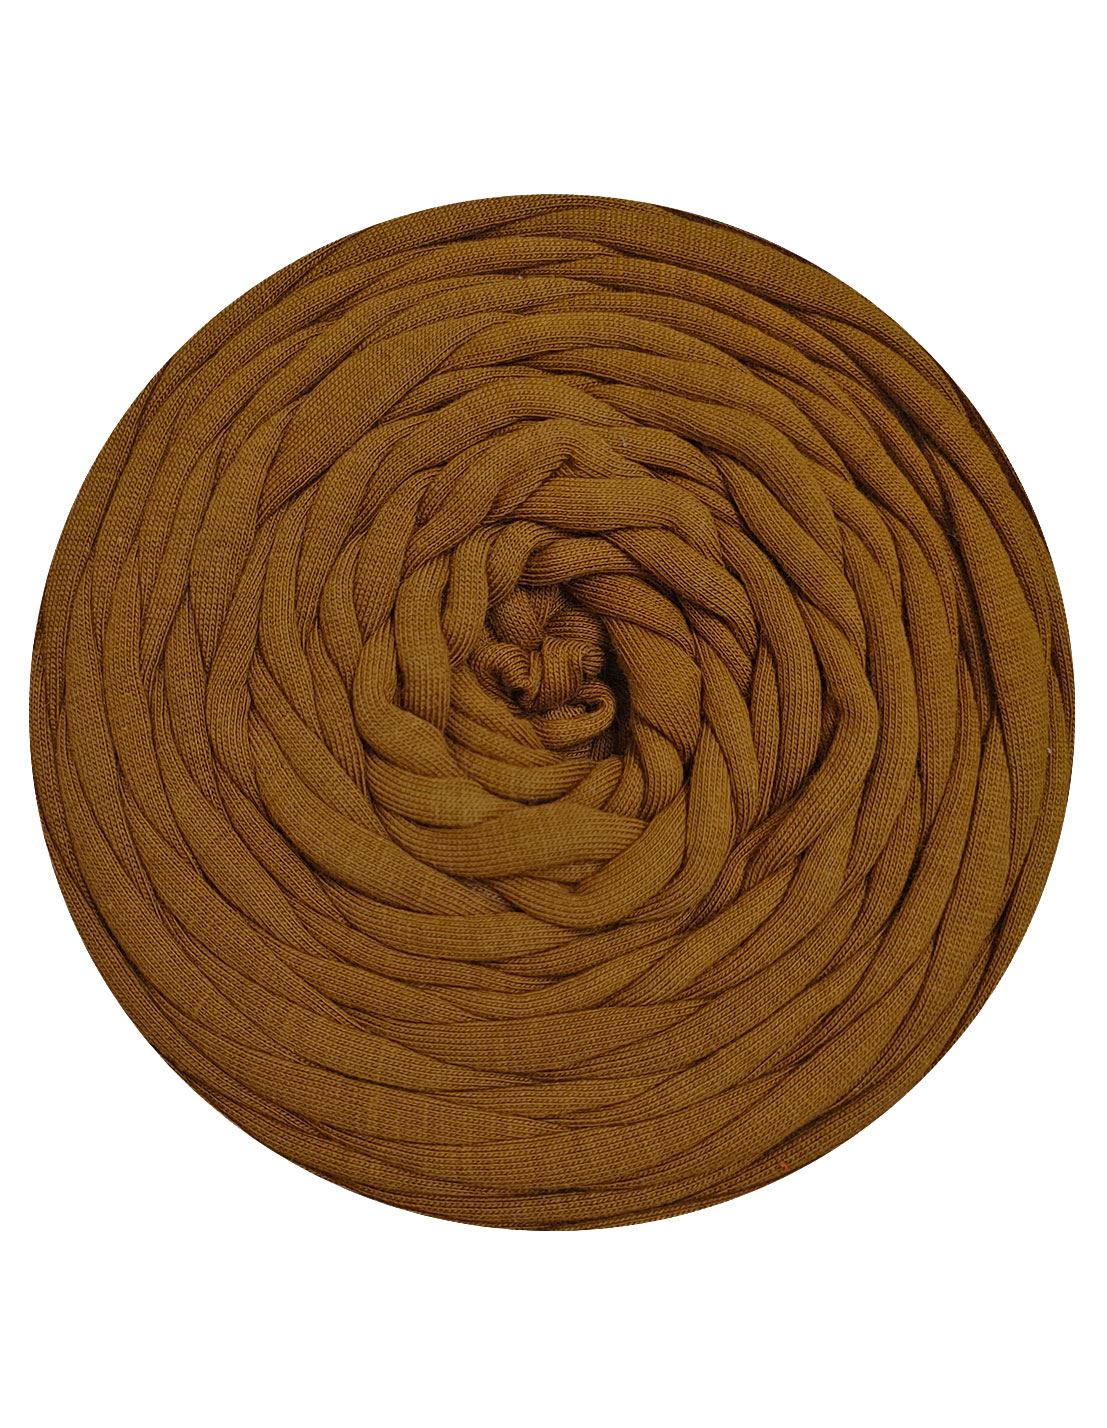 Dark copper brown t-shirt yarn (100-120m)